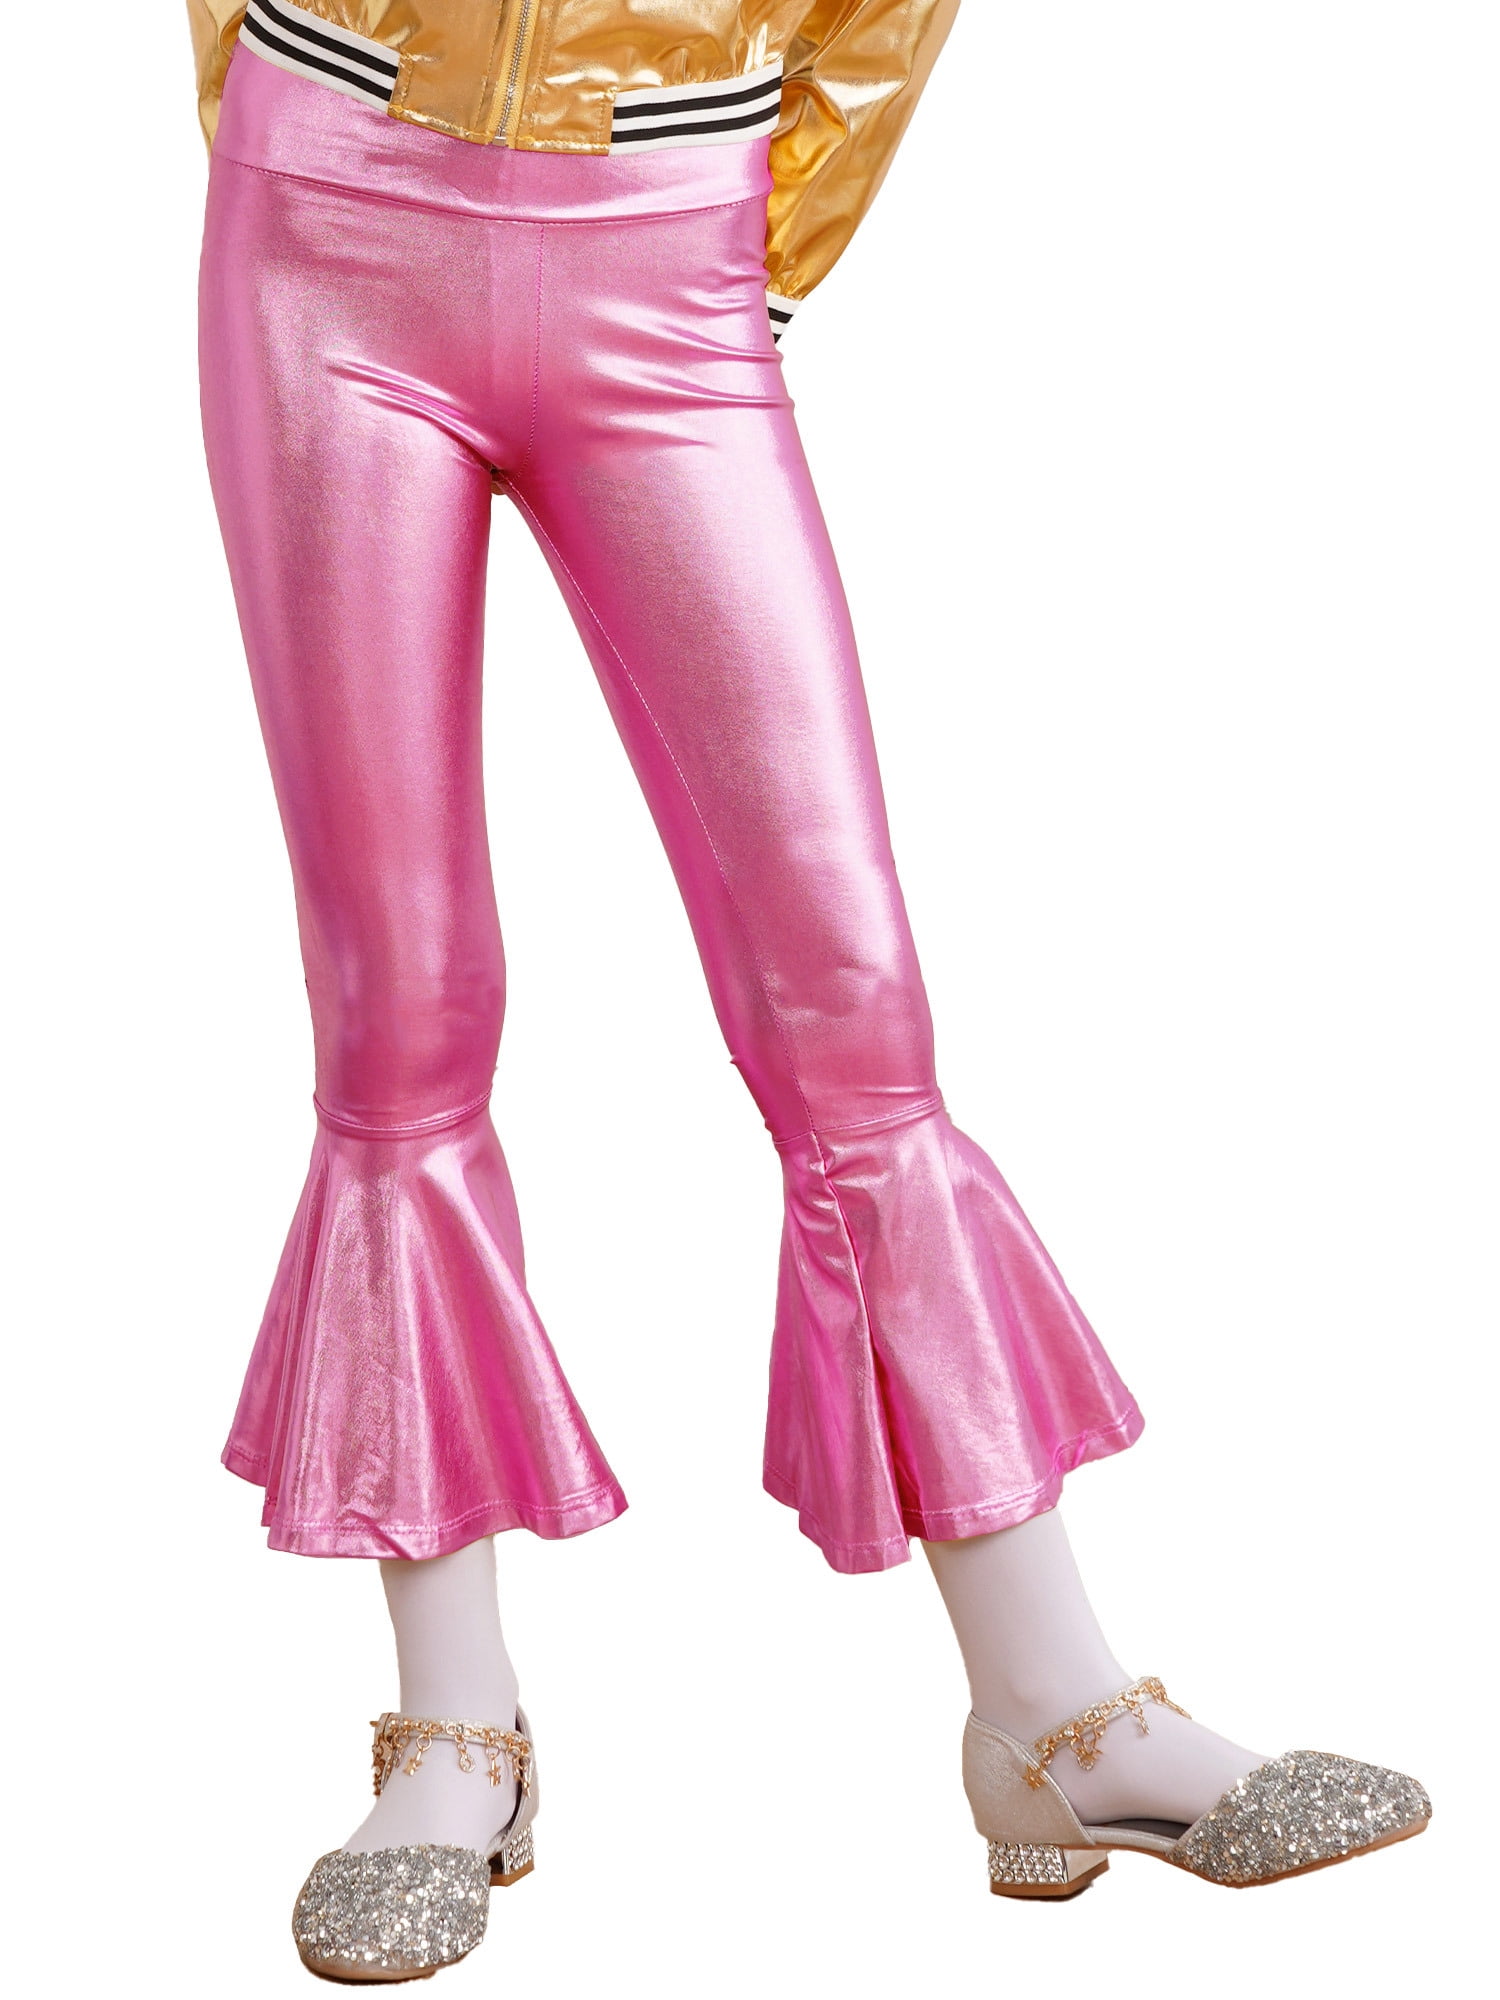 inhzoy Kids Girls Boys Shiny Metallic Flared Pants Bell Bottoms Sequins  Dance Leggings Trousers Pink 10 